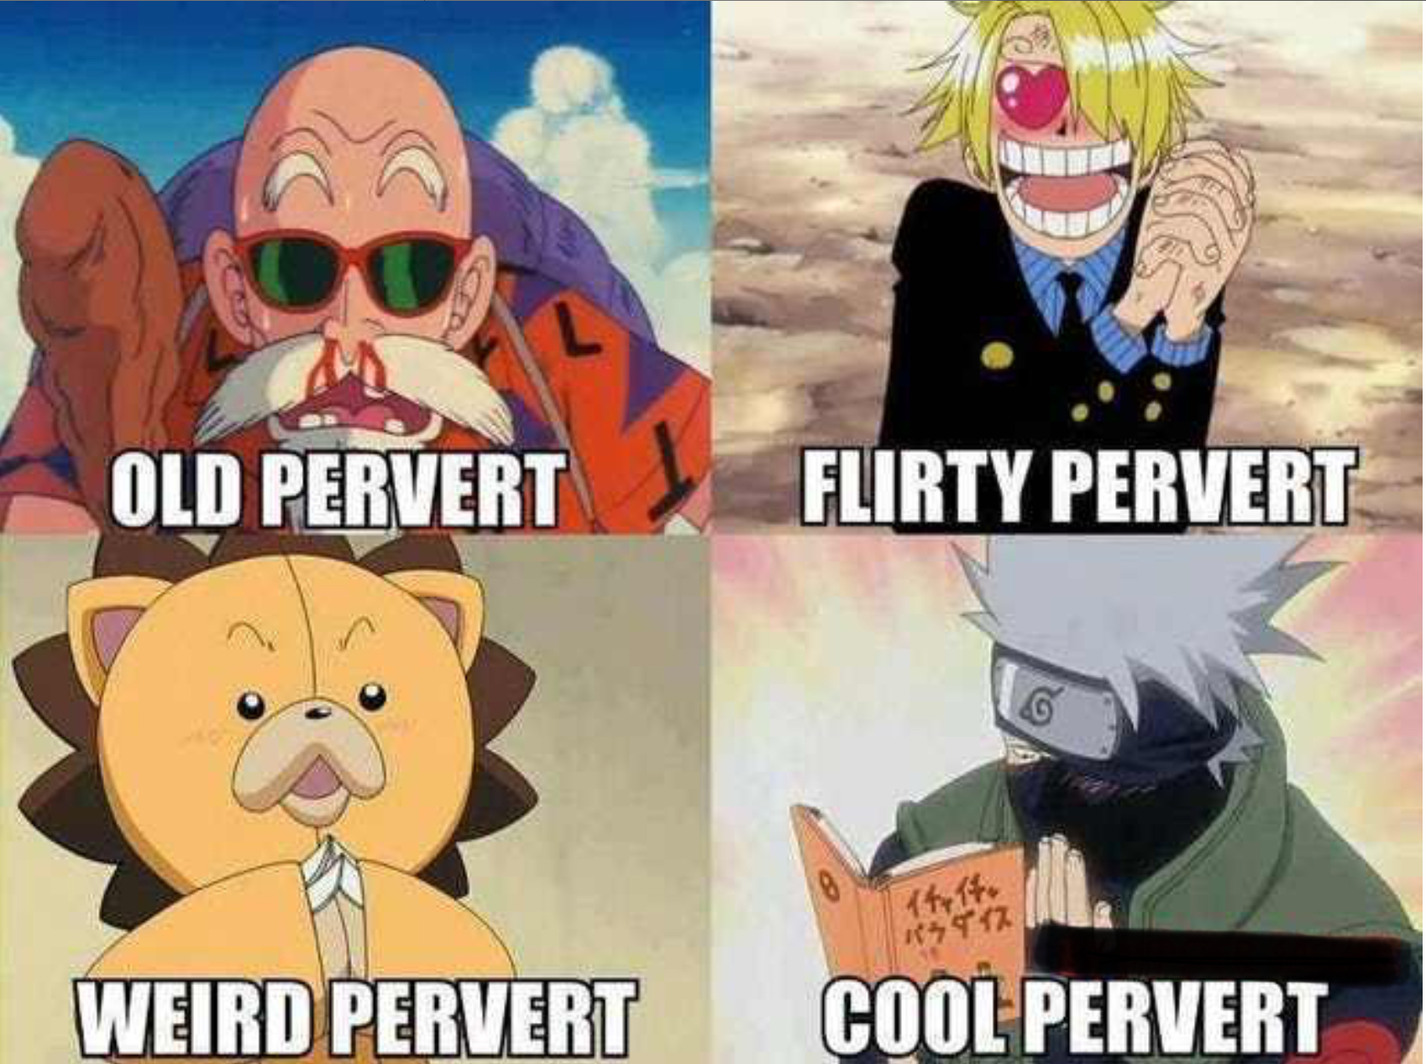 The types of perverts. - meme